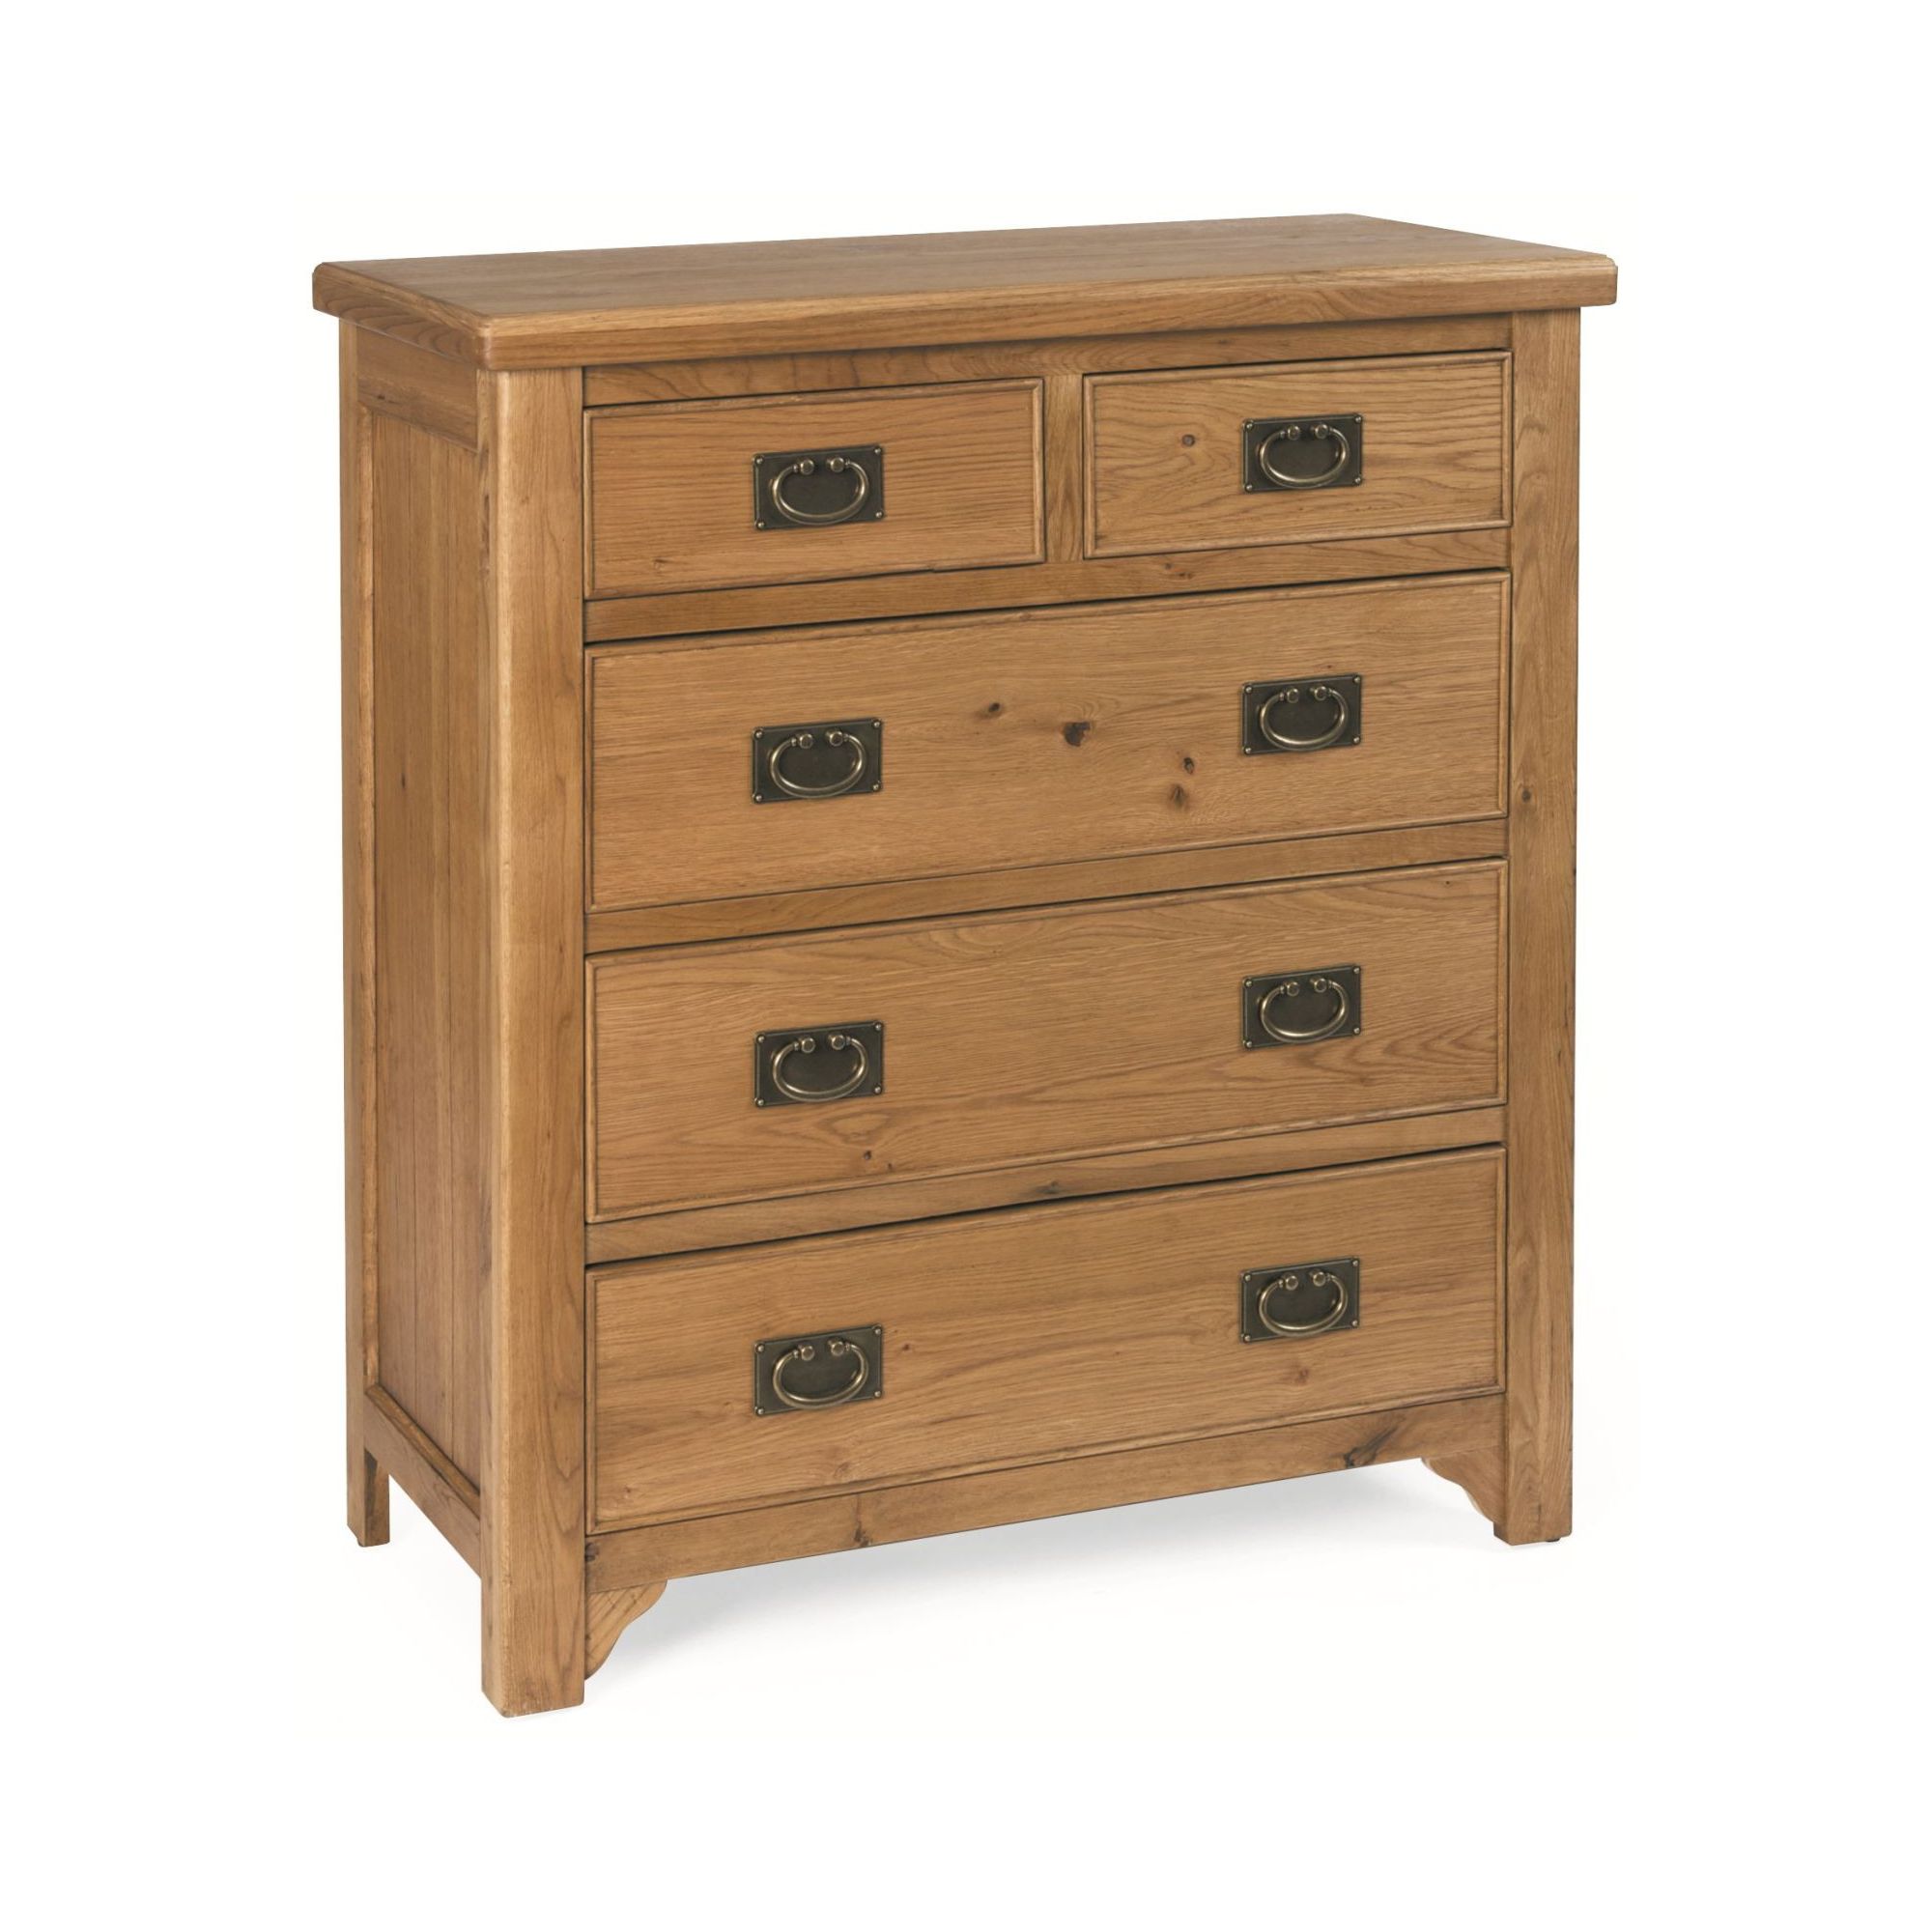 Kelburn Furniture Marino Rustic Oak 2 over 3 Drawer Chest at Tesco Direct